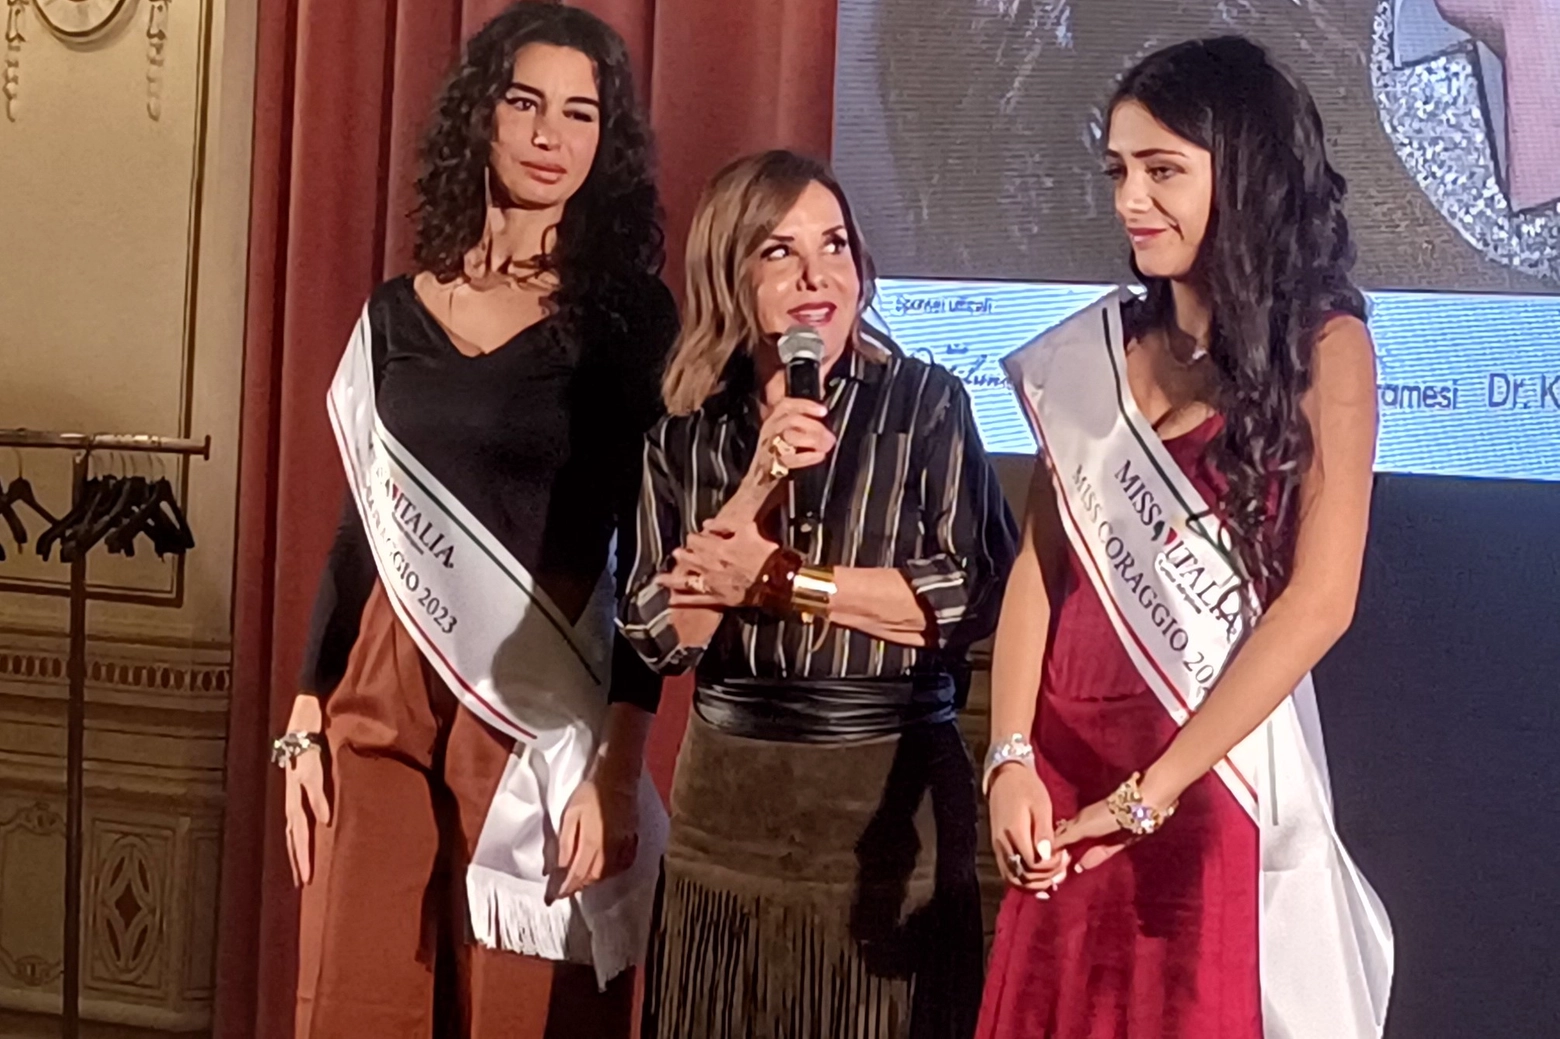 Le due Miss coraggio, la grossetana Ilenia Garofalo la umbra Jennifer Cavalletti con Patrizia Mirigliani